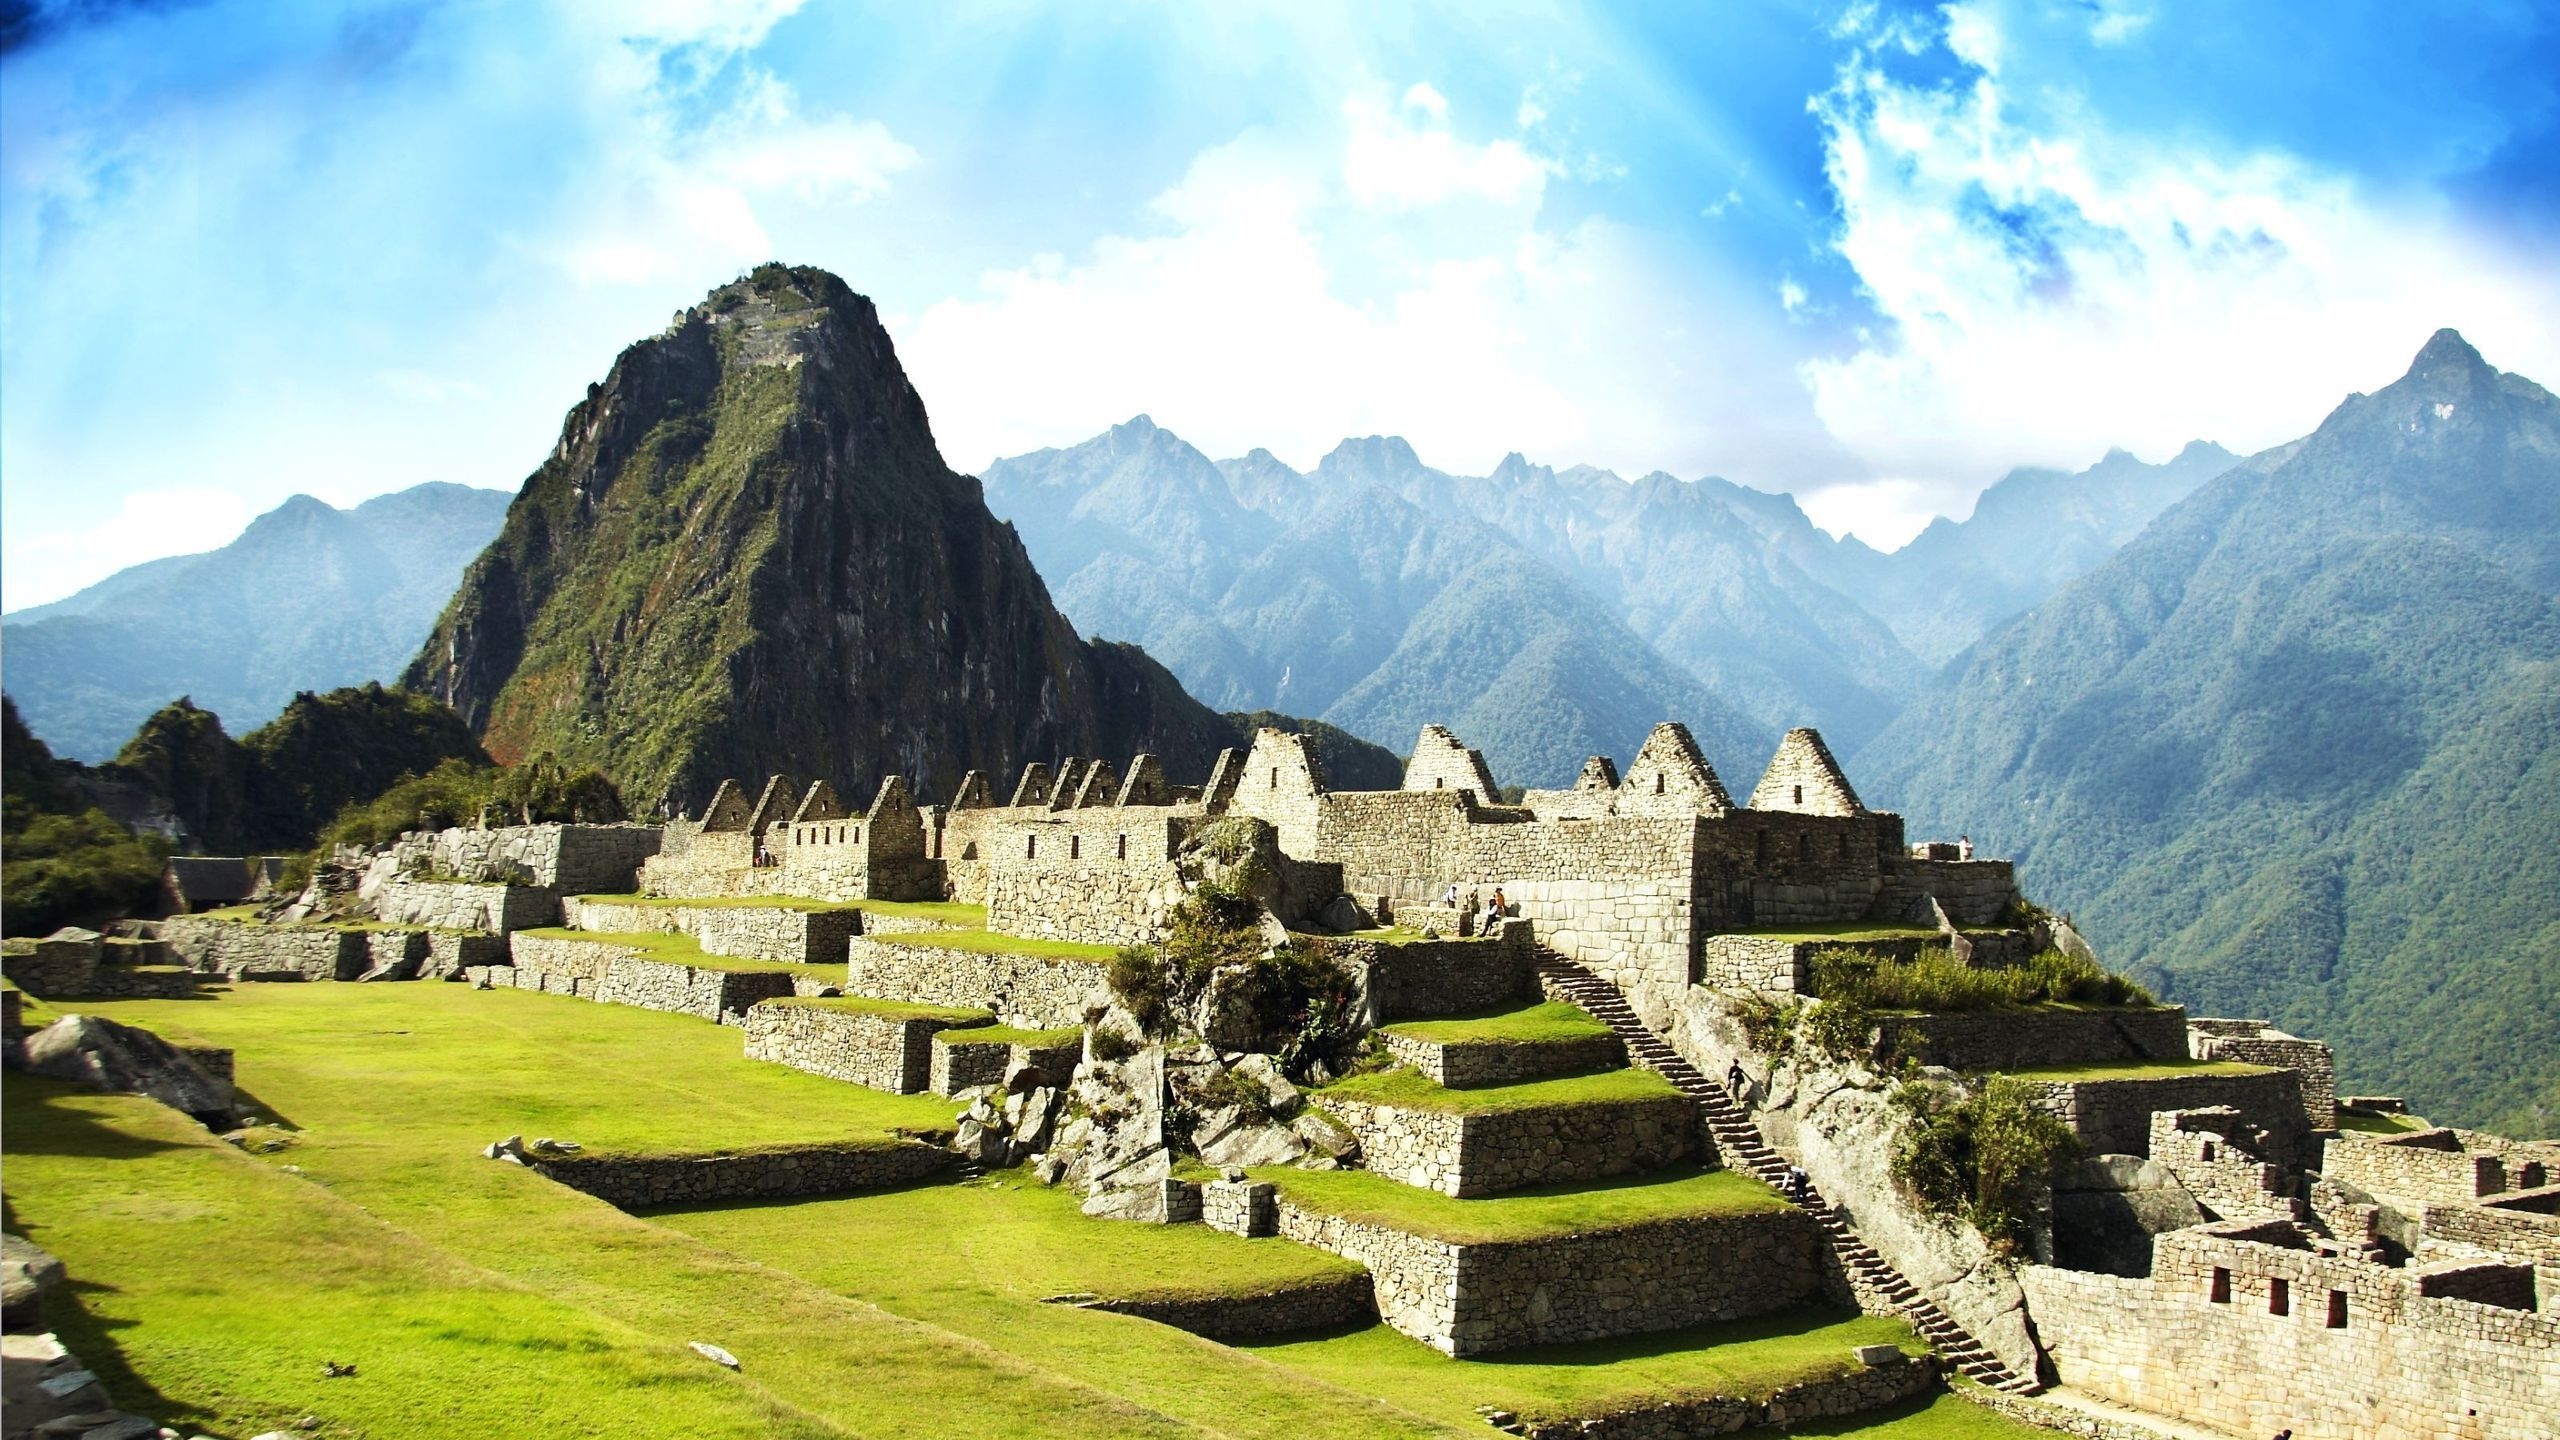 Machu Picchu for 2560x1440 HDTV resolution